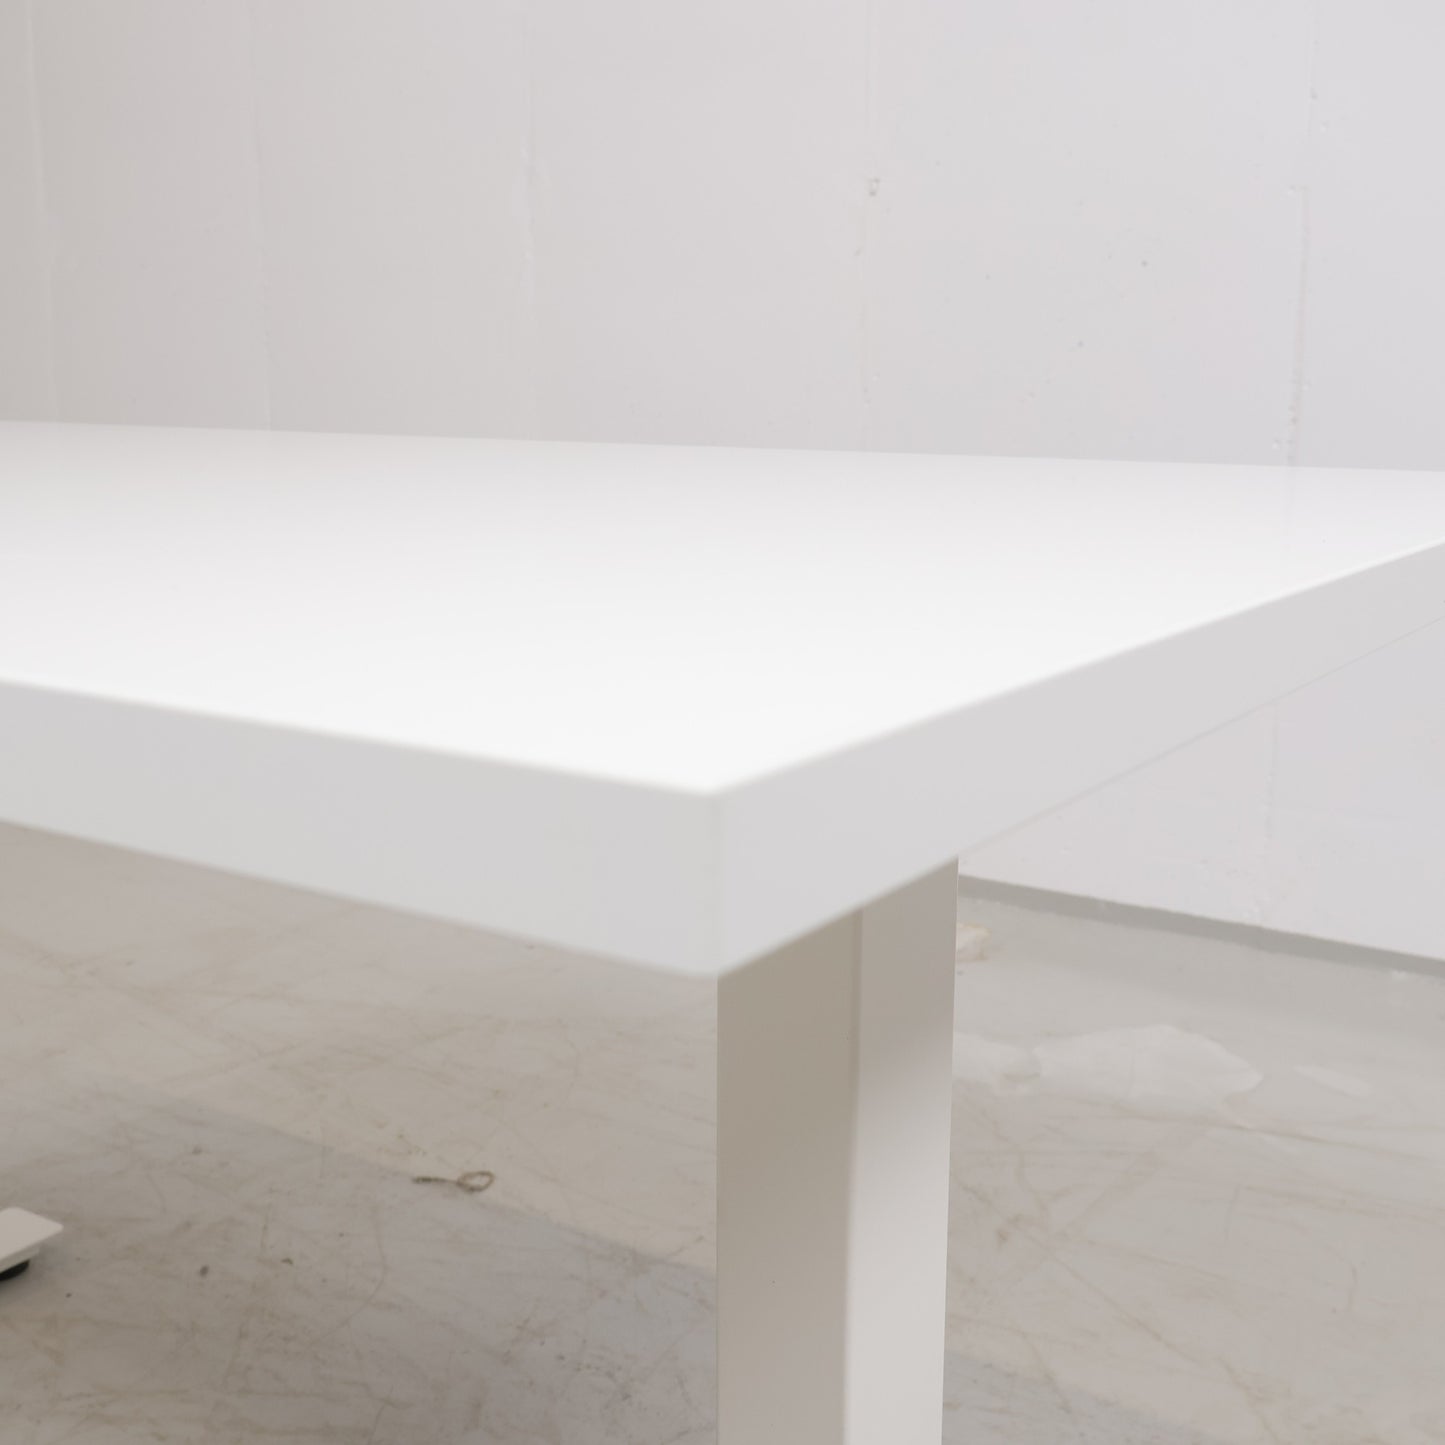 Kvalitetsikret | 140x80, AJ Produkter skrivebord i fargen hvit